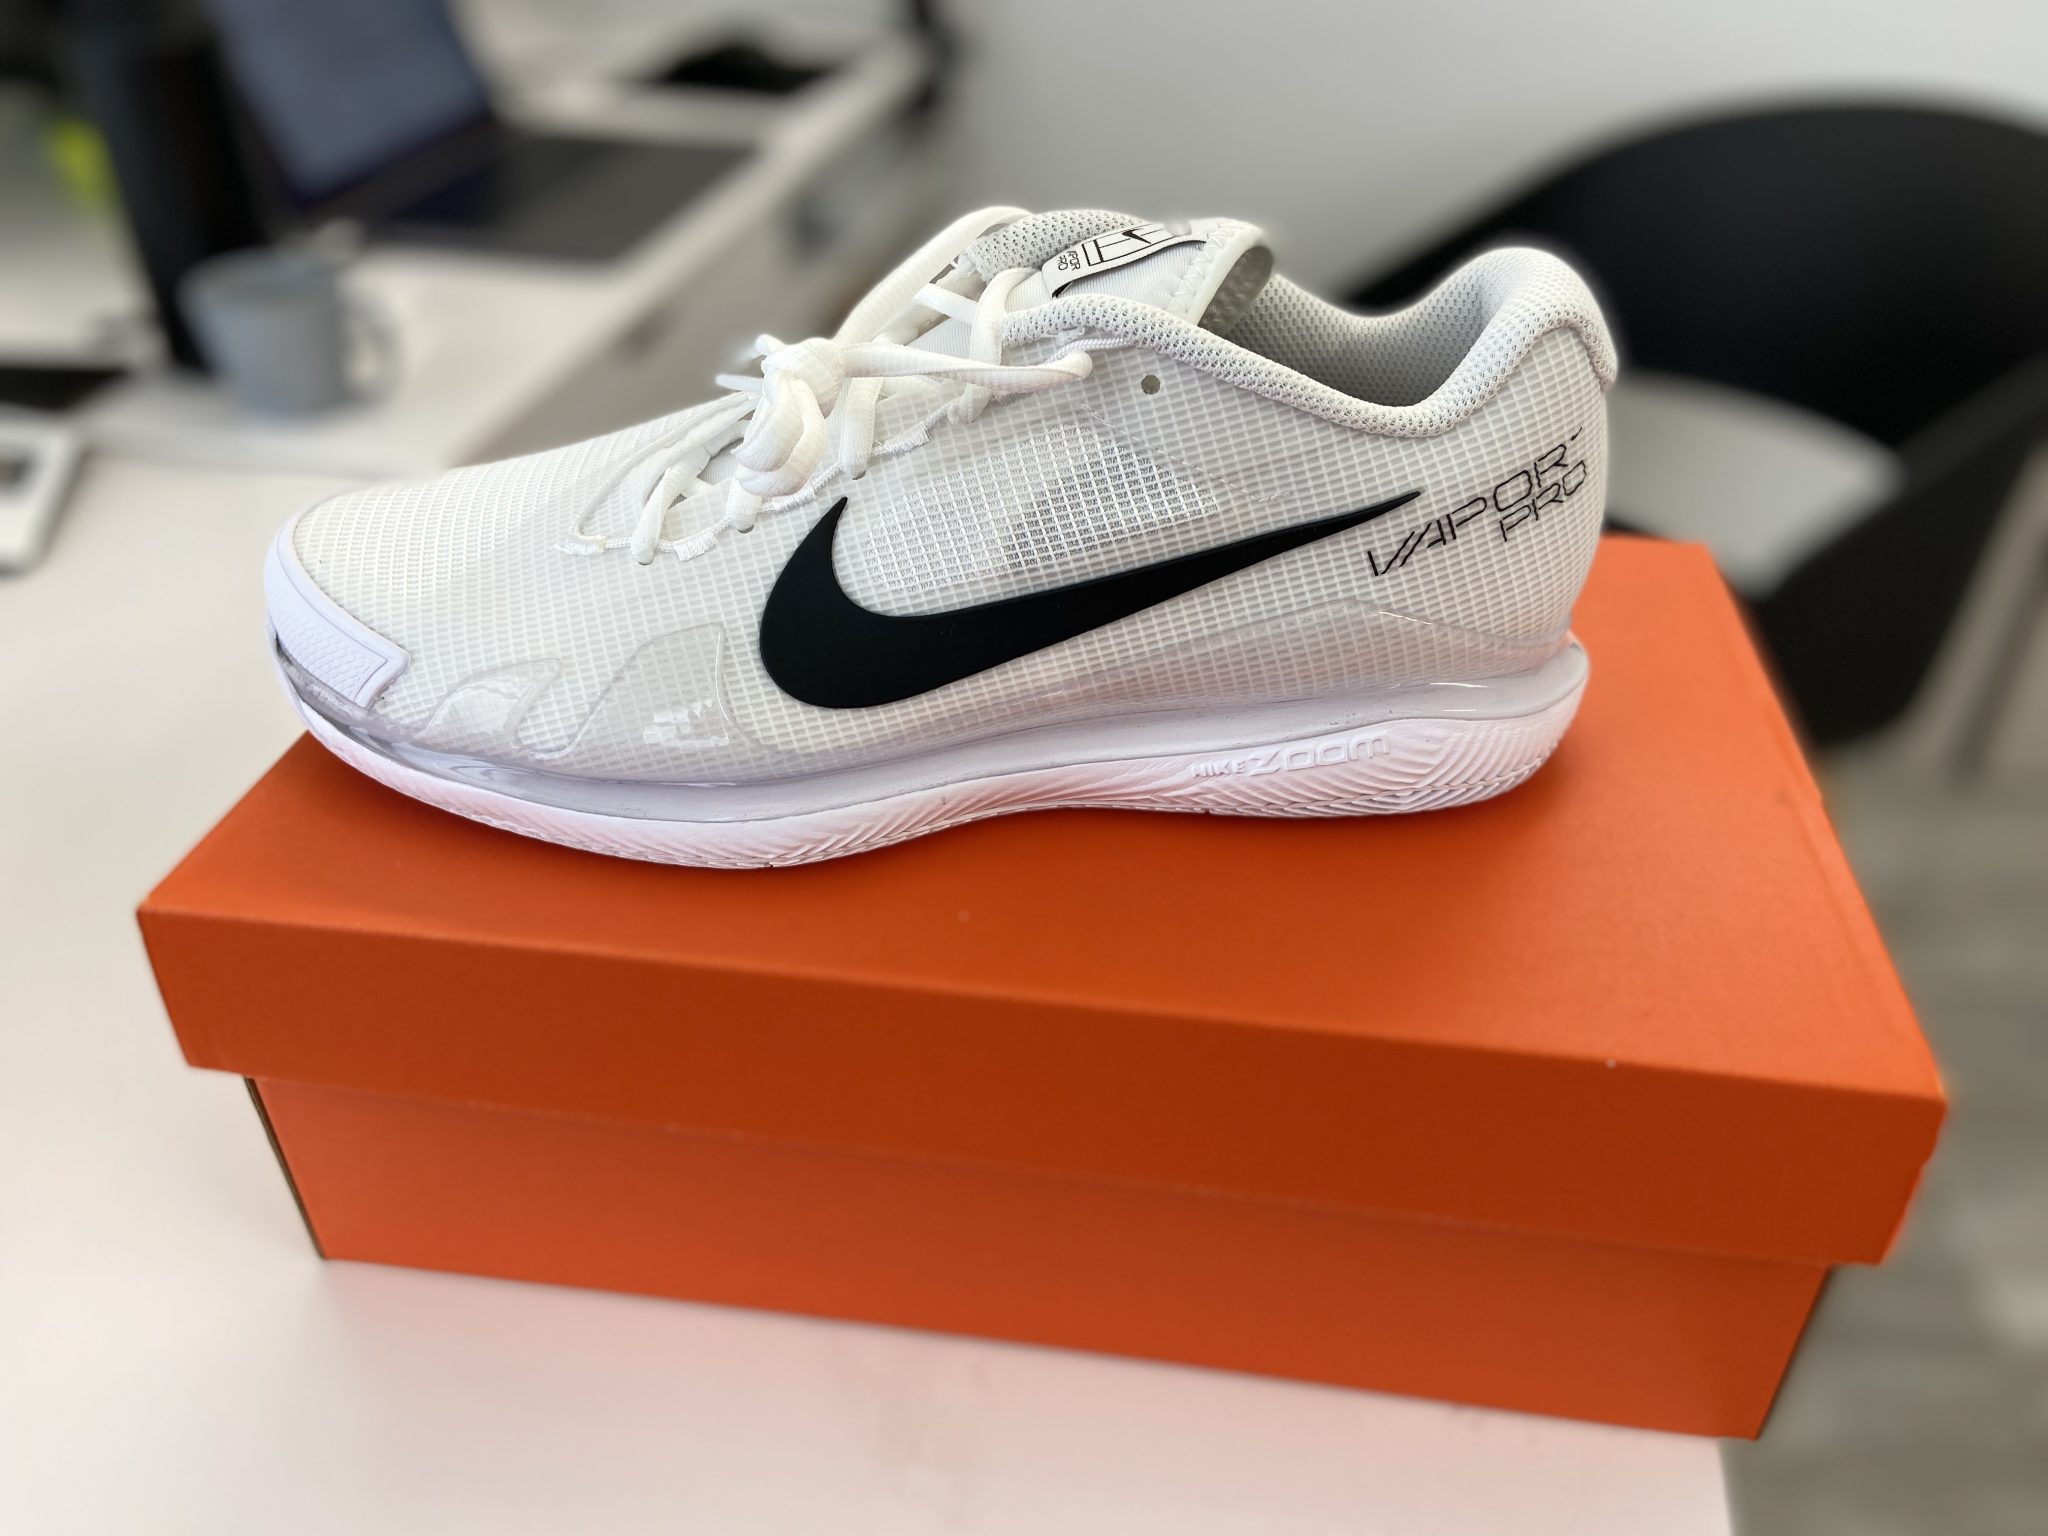 Nike Air Zoom Vapor Pro Review Tennisnerd net New tennis shoe review